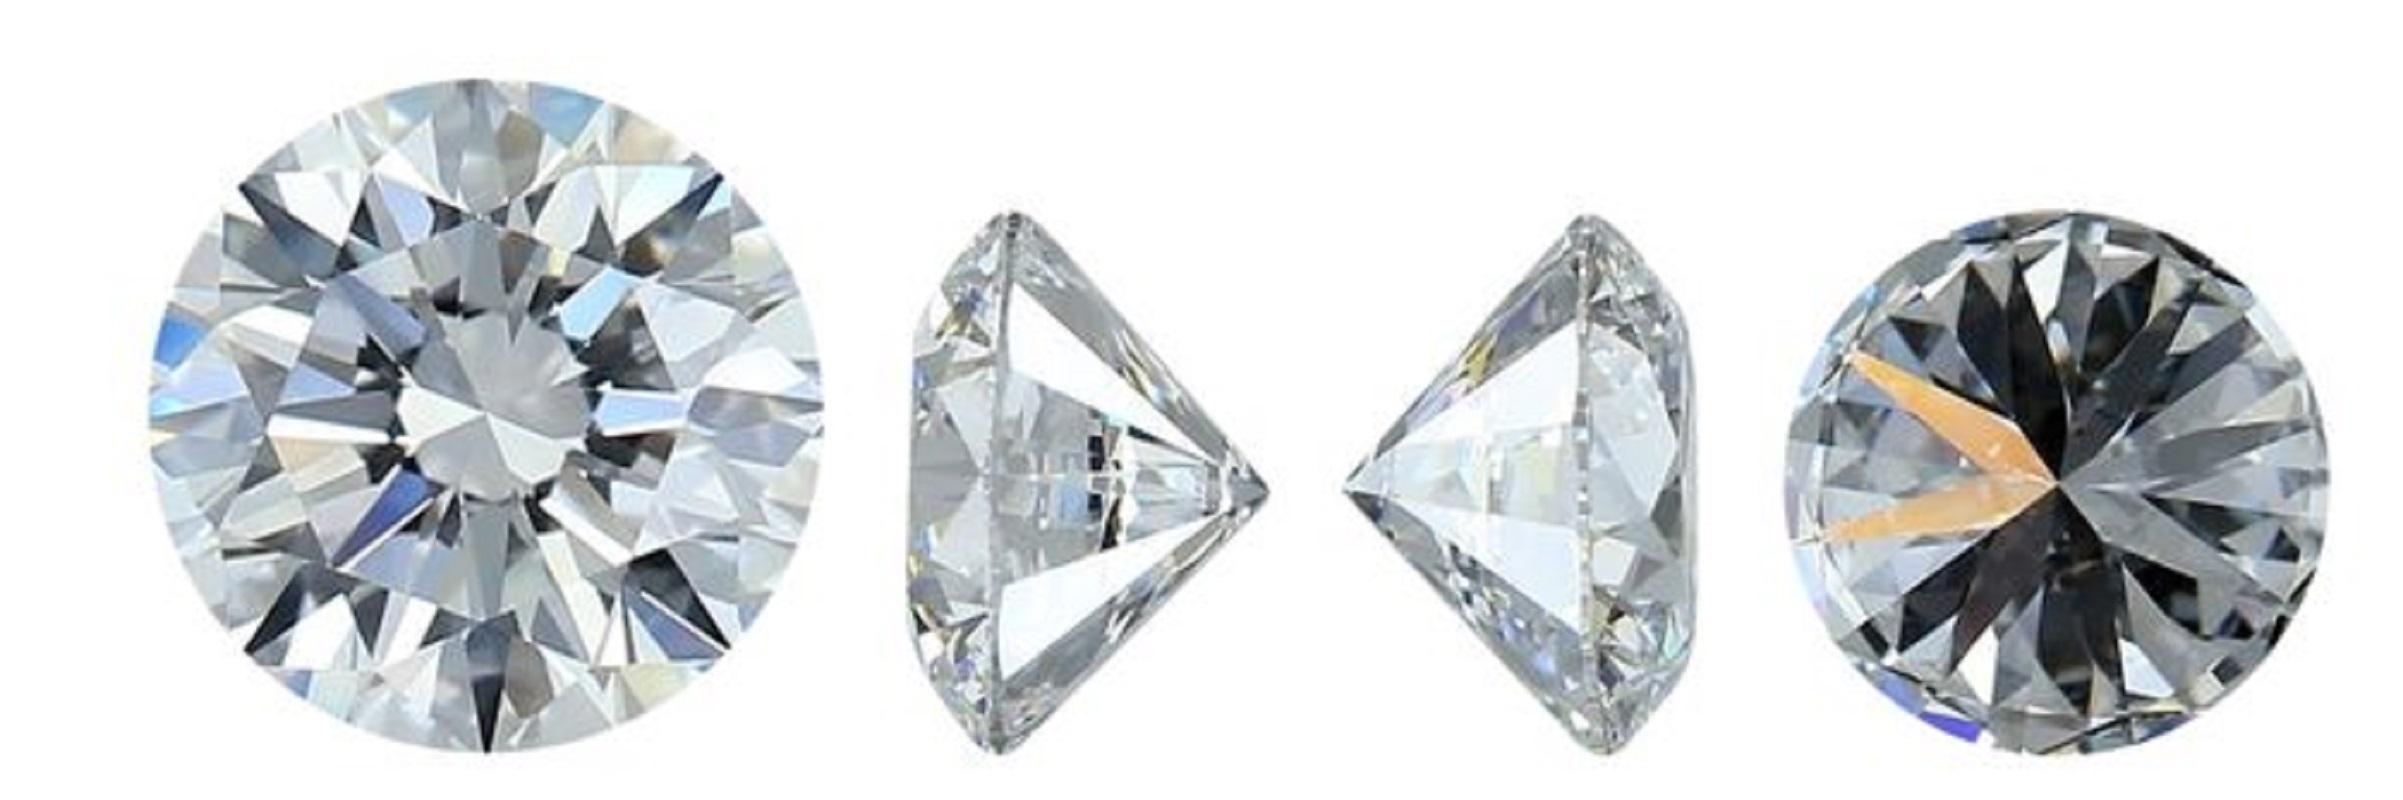 Diamant rond et brillant naturel de 1,05 carat D VS2, certifi IGI en vente 1